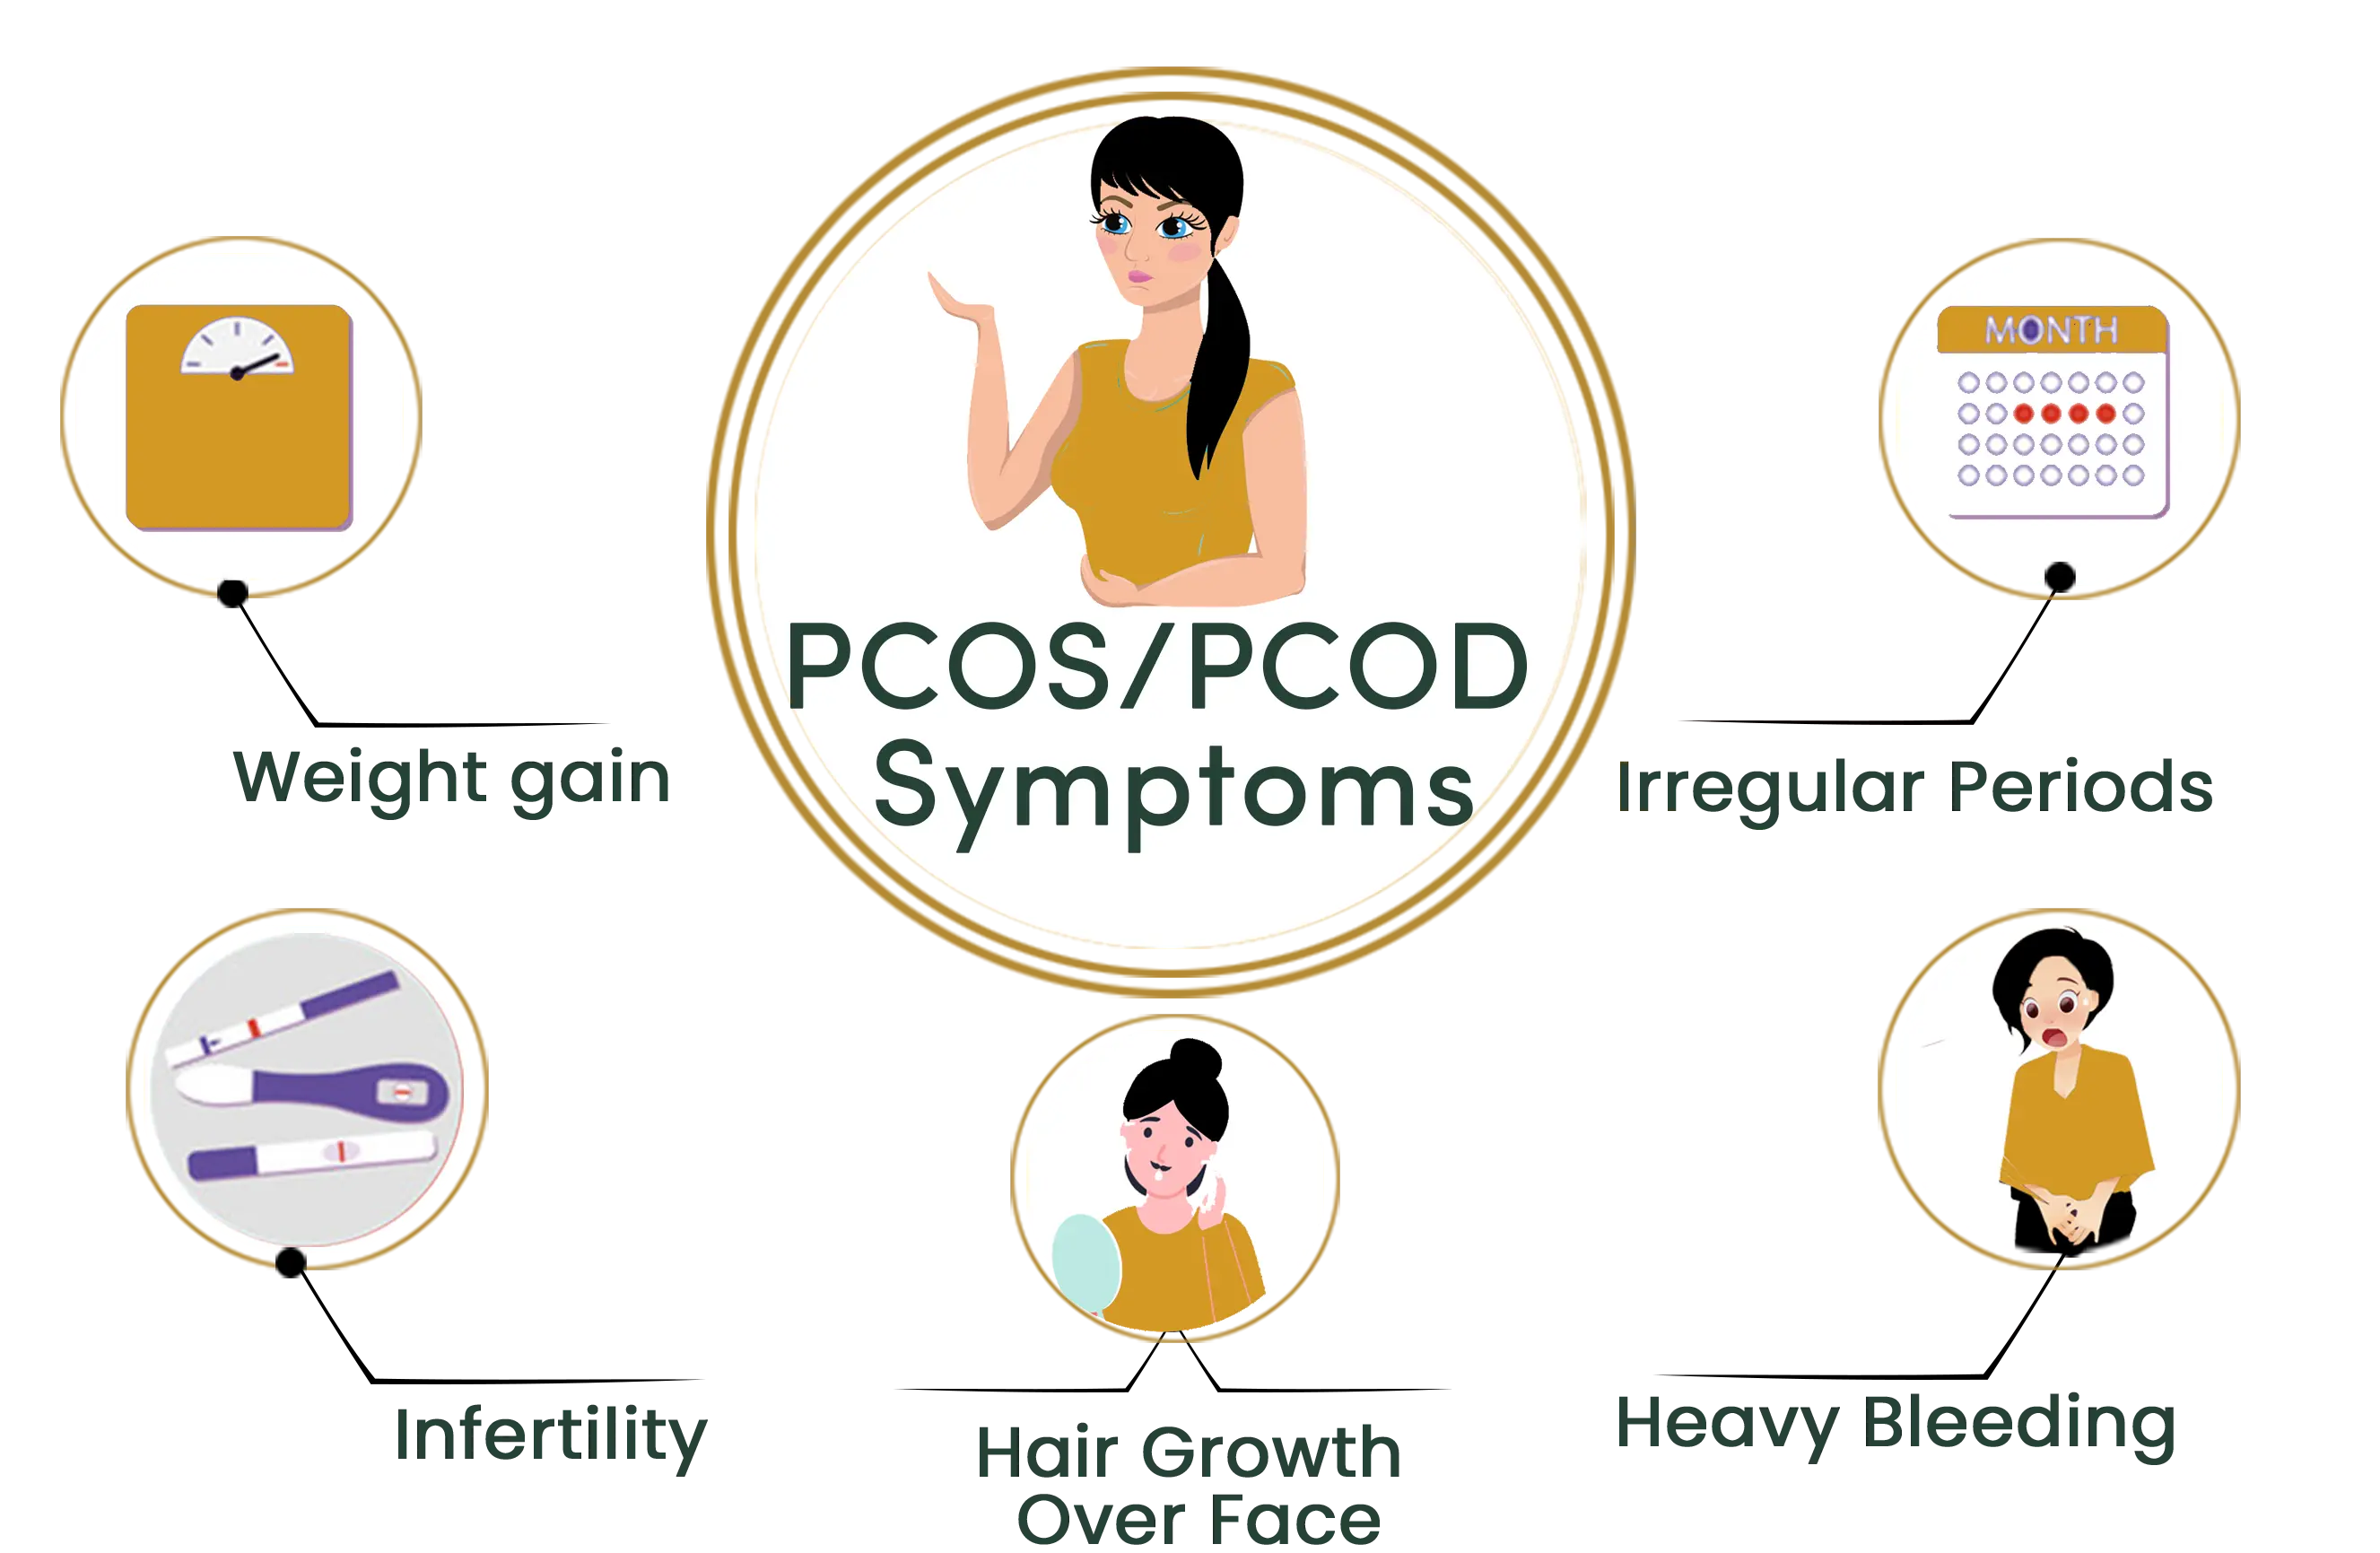 PCOS symptoms